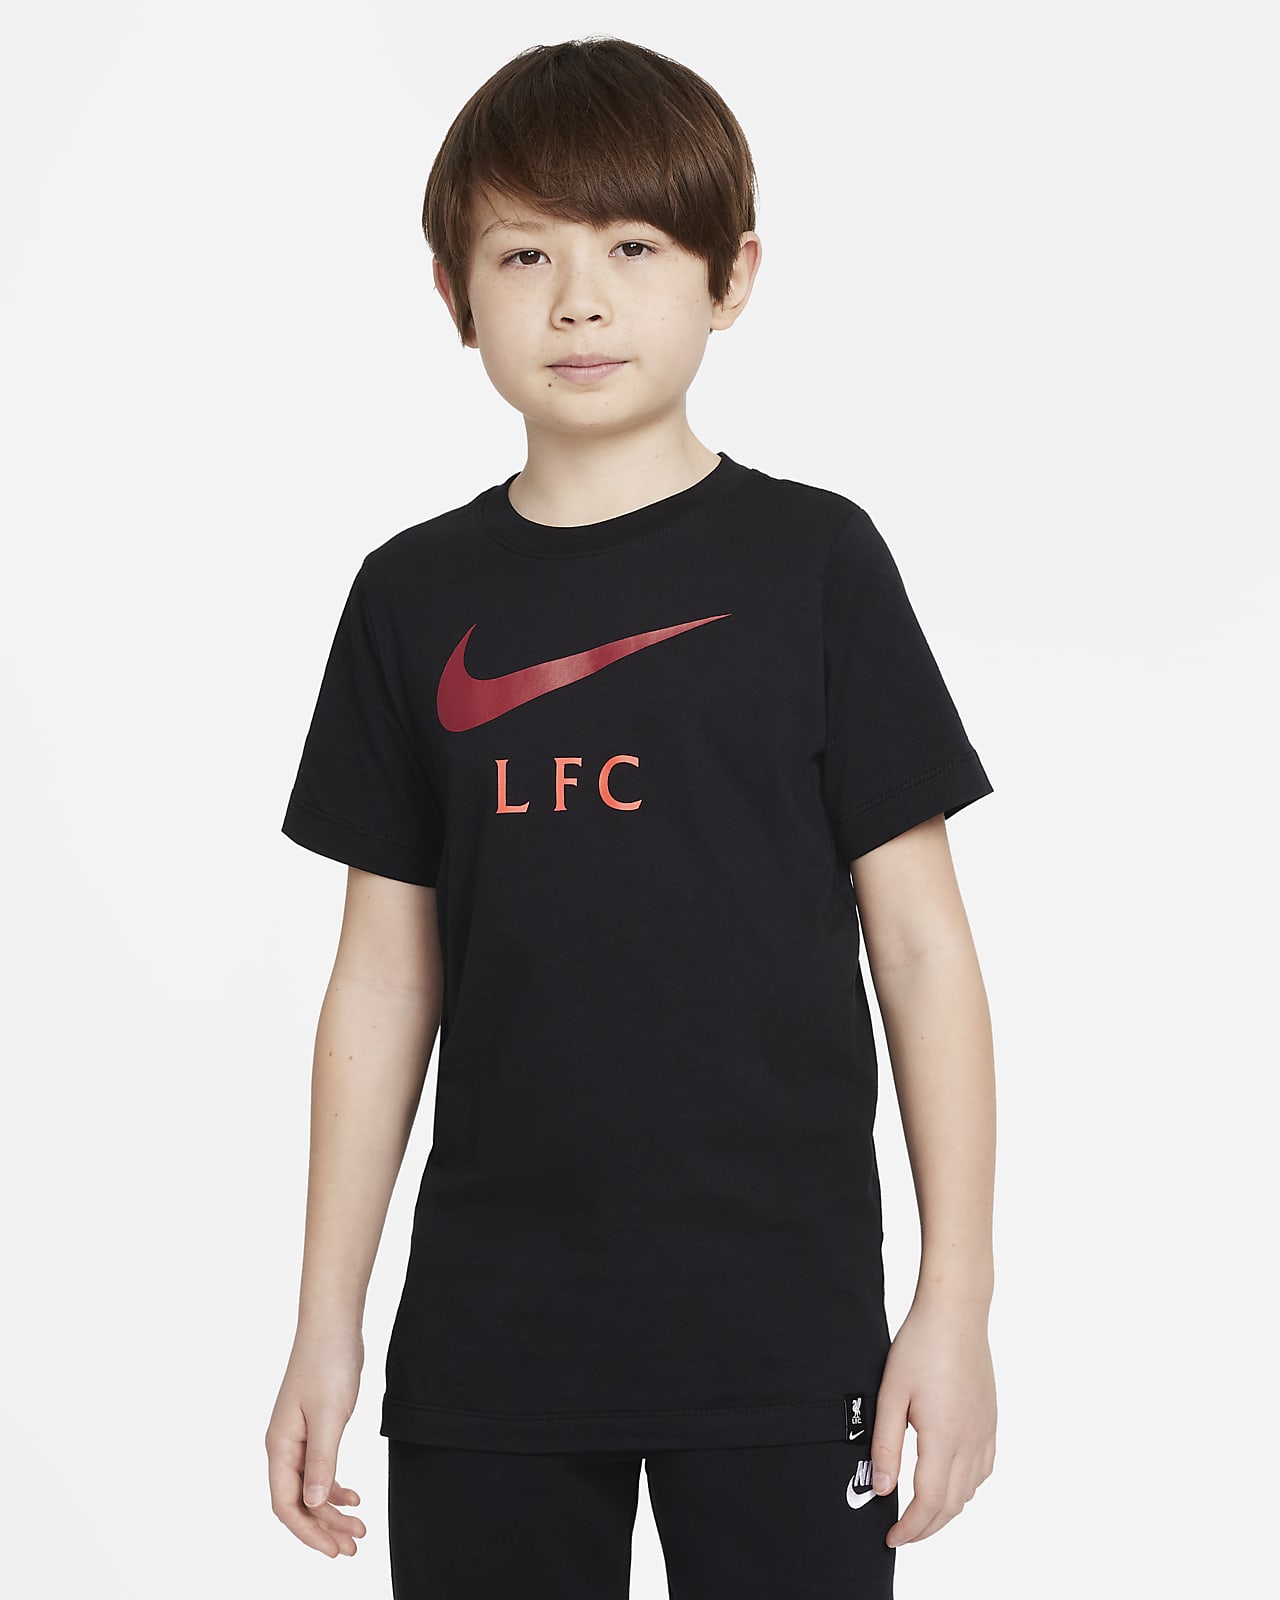 Liverpool FC Big Kids' Soccer T-Shirt